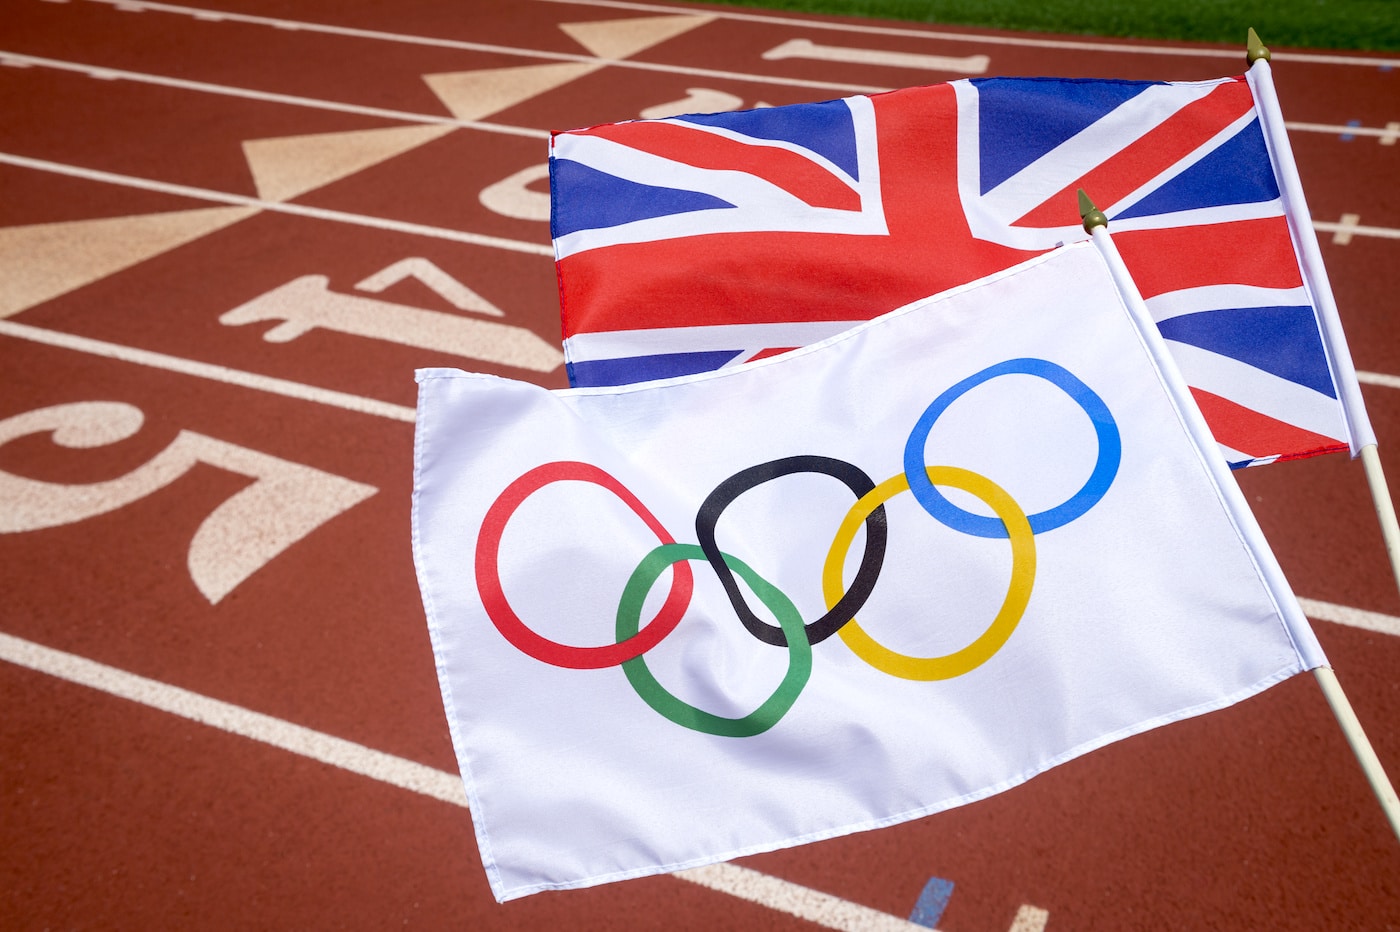 Olympic and British union jack flag flutter together